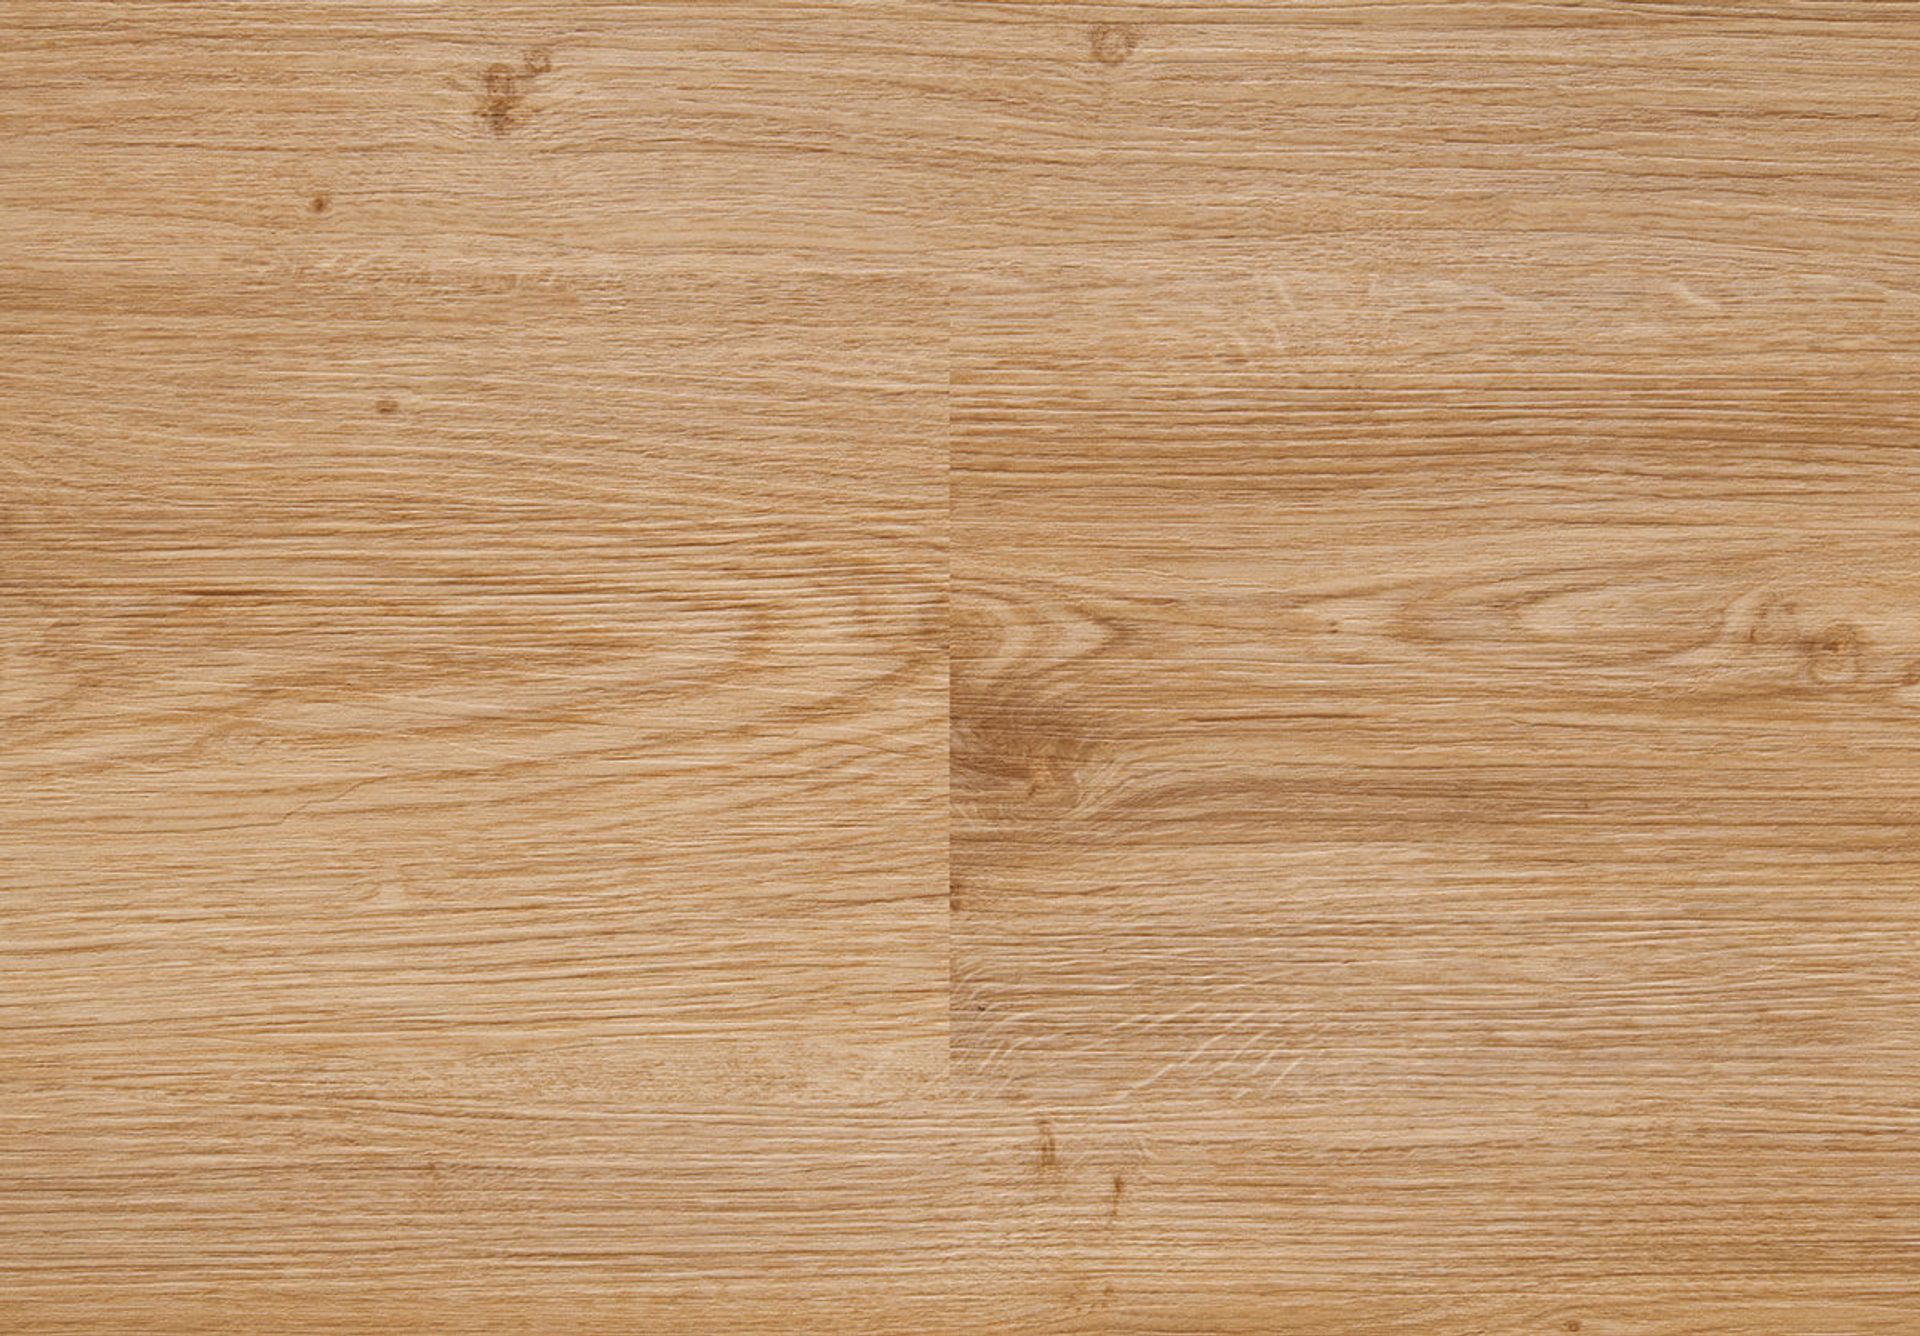 Vinyl-Korkboden Amorim Wicanders wood Go Almond Oak  - Planke 122 cm x 18,5 cm - Gesamtstärke 10,5 mm